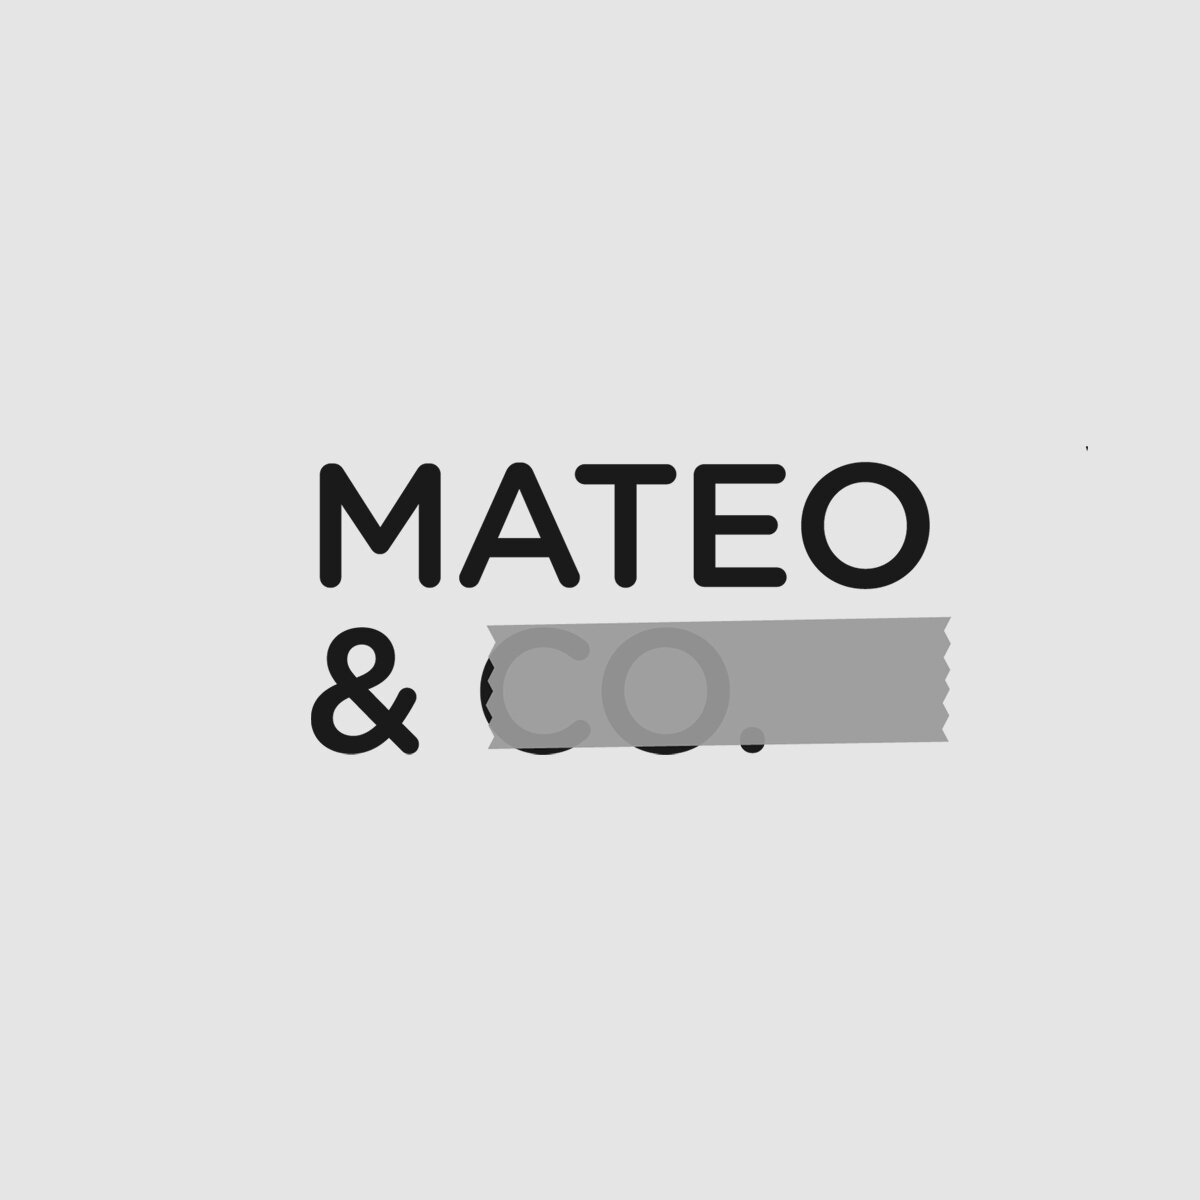 Mateo&Co.jpg